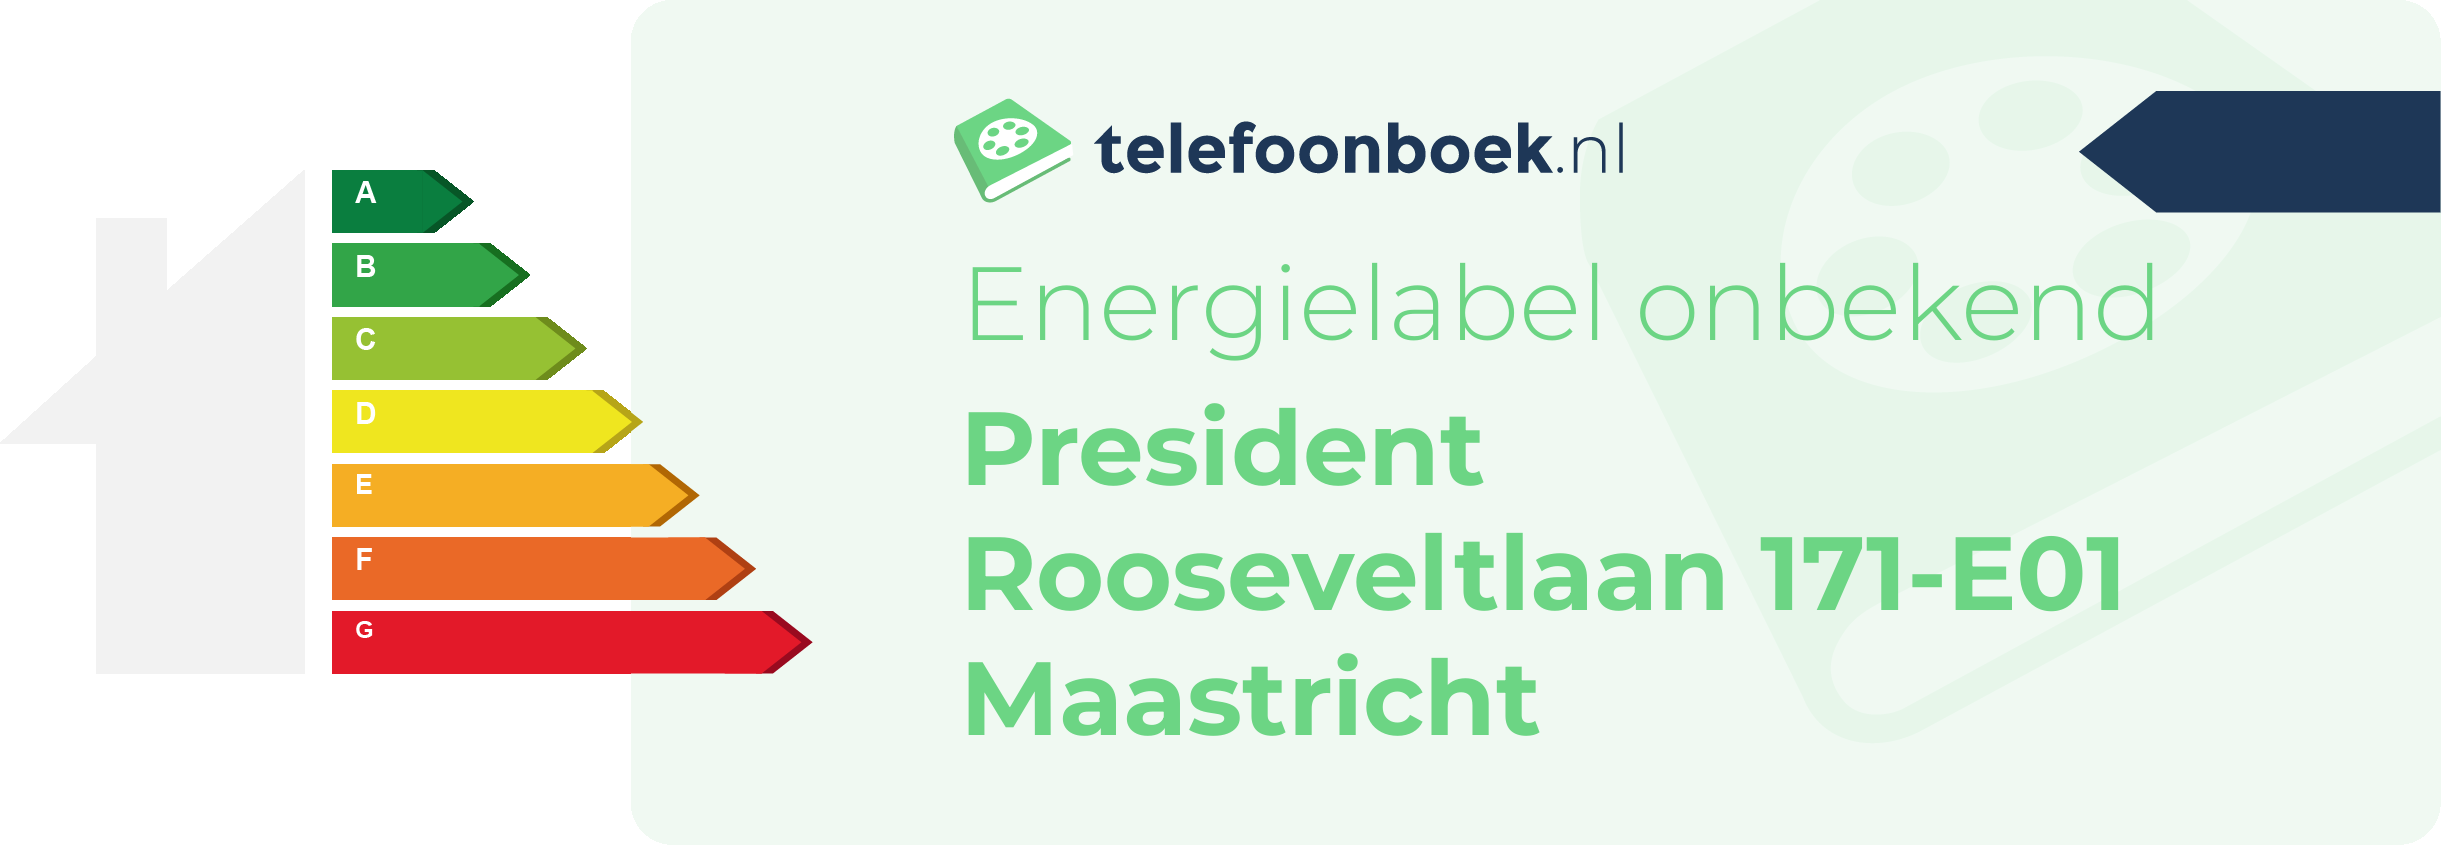 Energielabel President Rooseveltlaan 171-E01 Maastricht